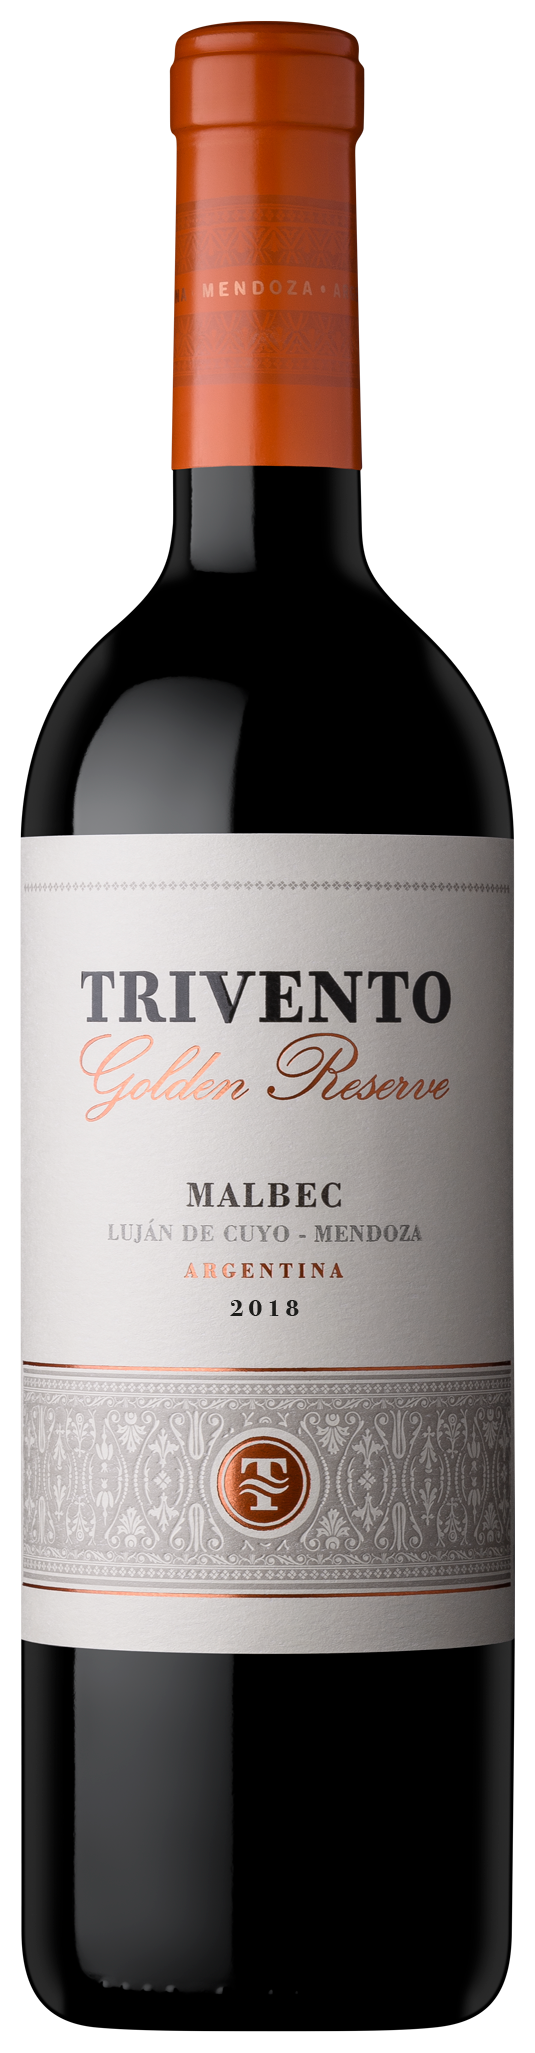 Trivento Golden Reserve Malbec 2018